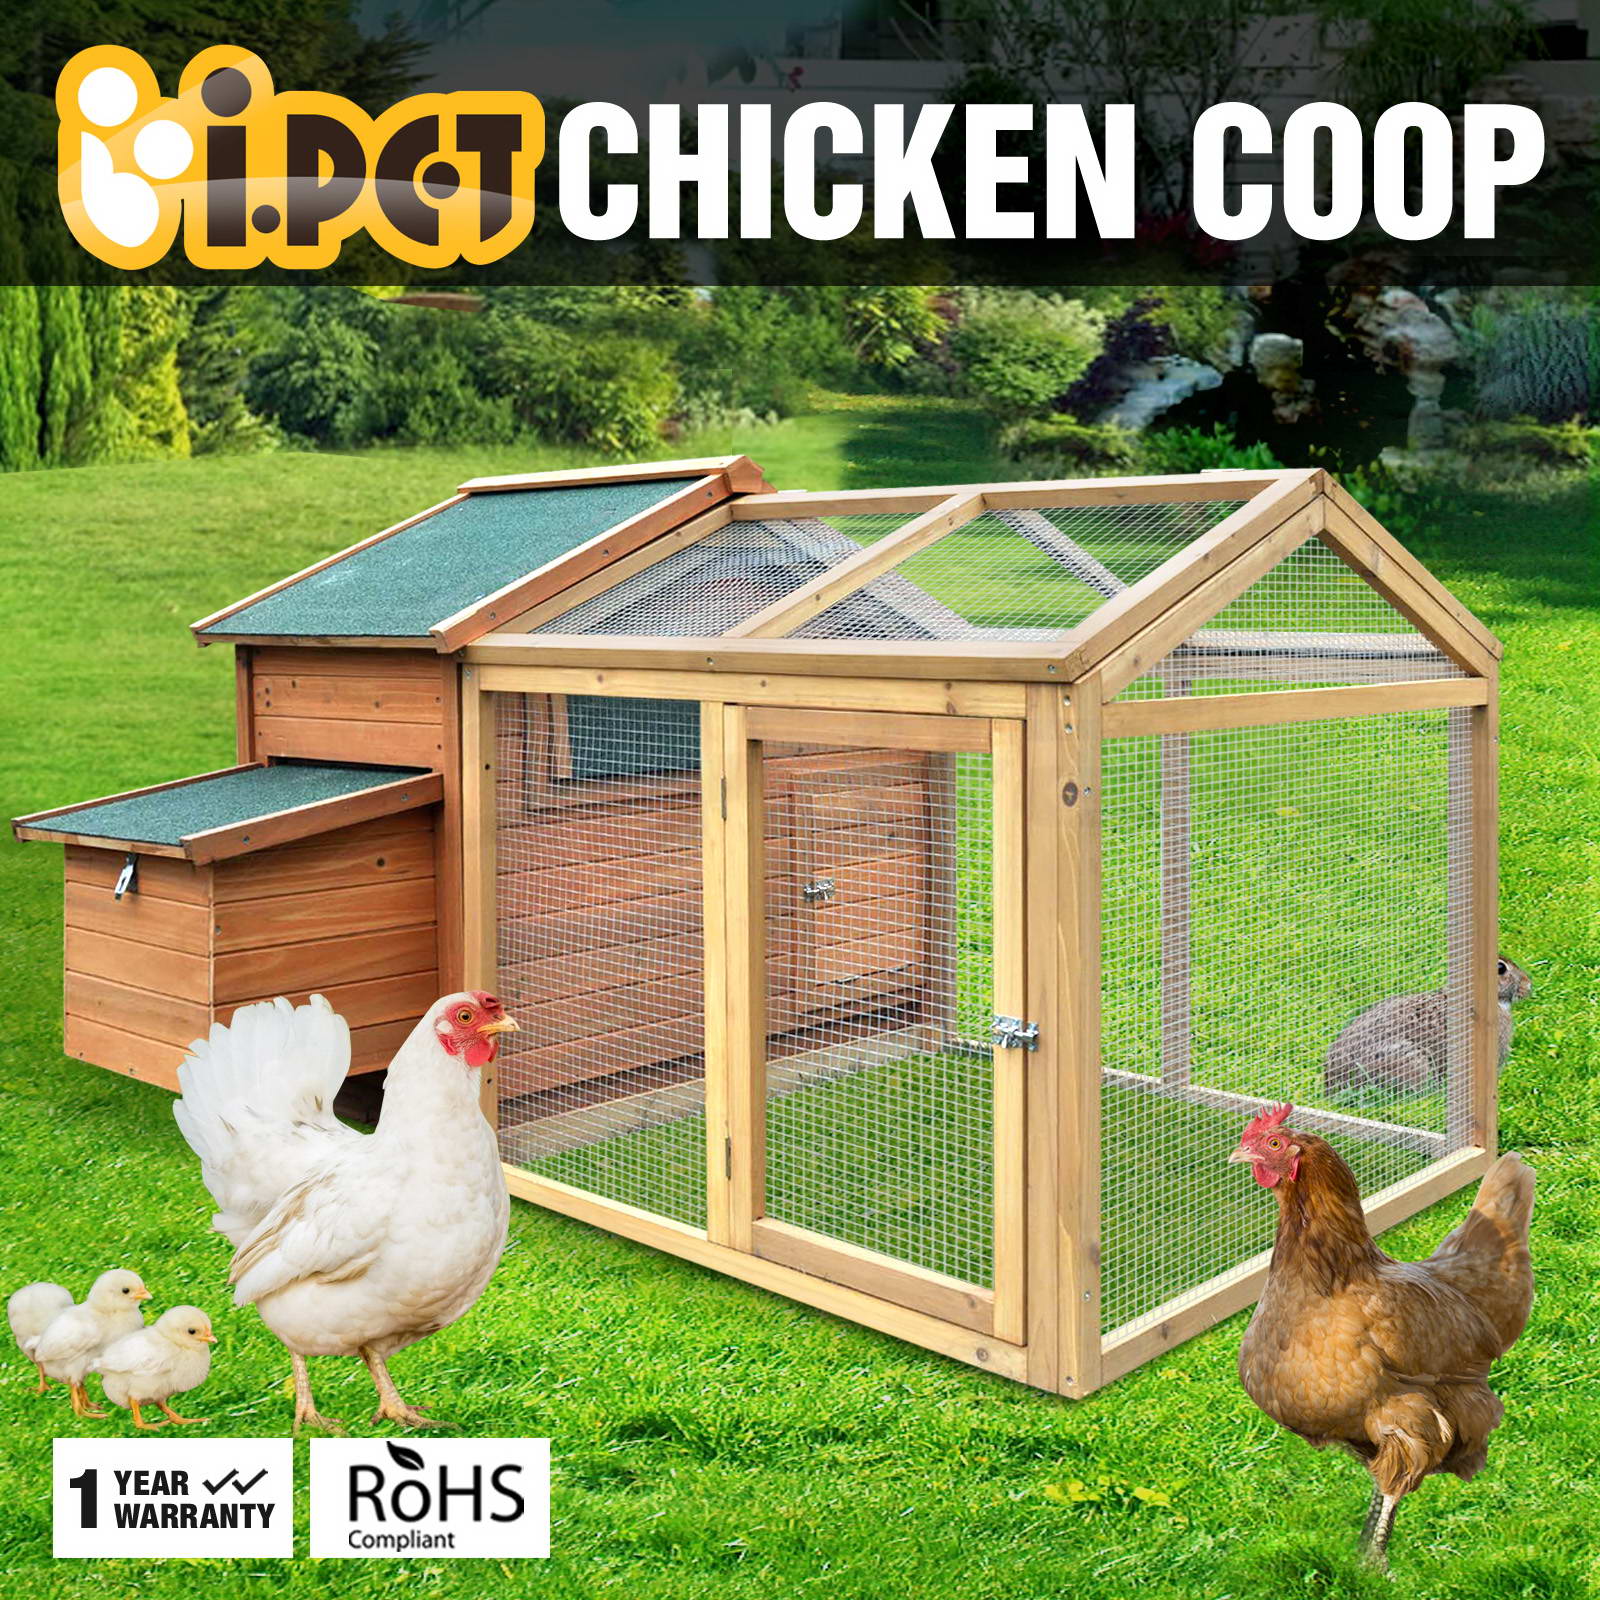 Details about Chicken Coop Rabbit Hutch Pet Cage Hen House Guinea Pig ...